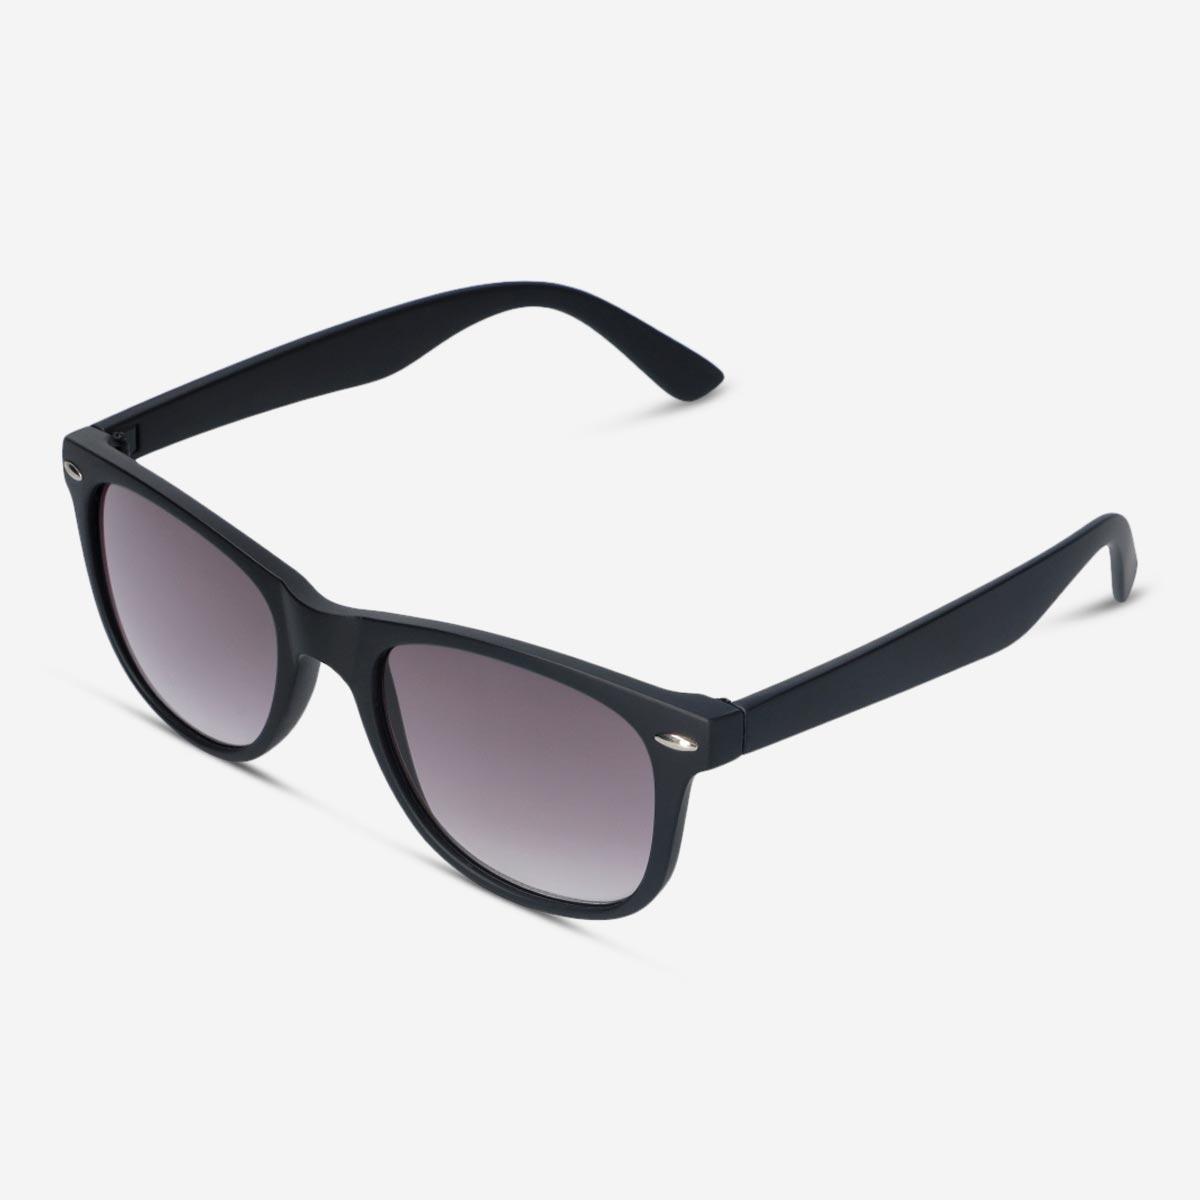 Black reading sunglasses. + 3.0